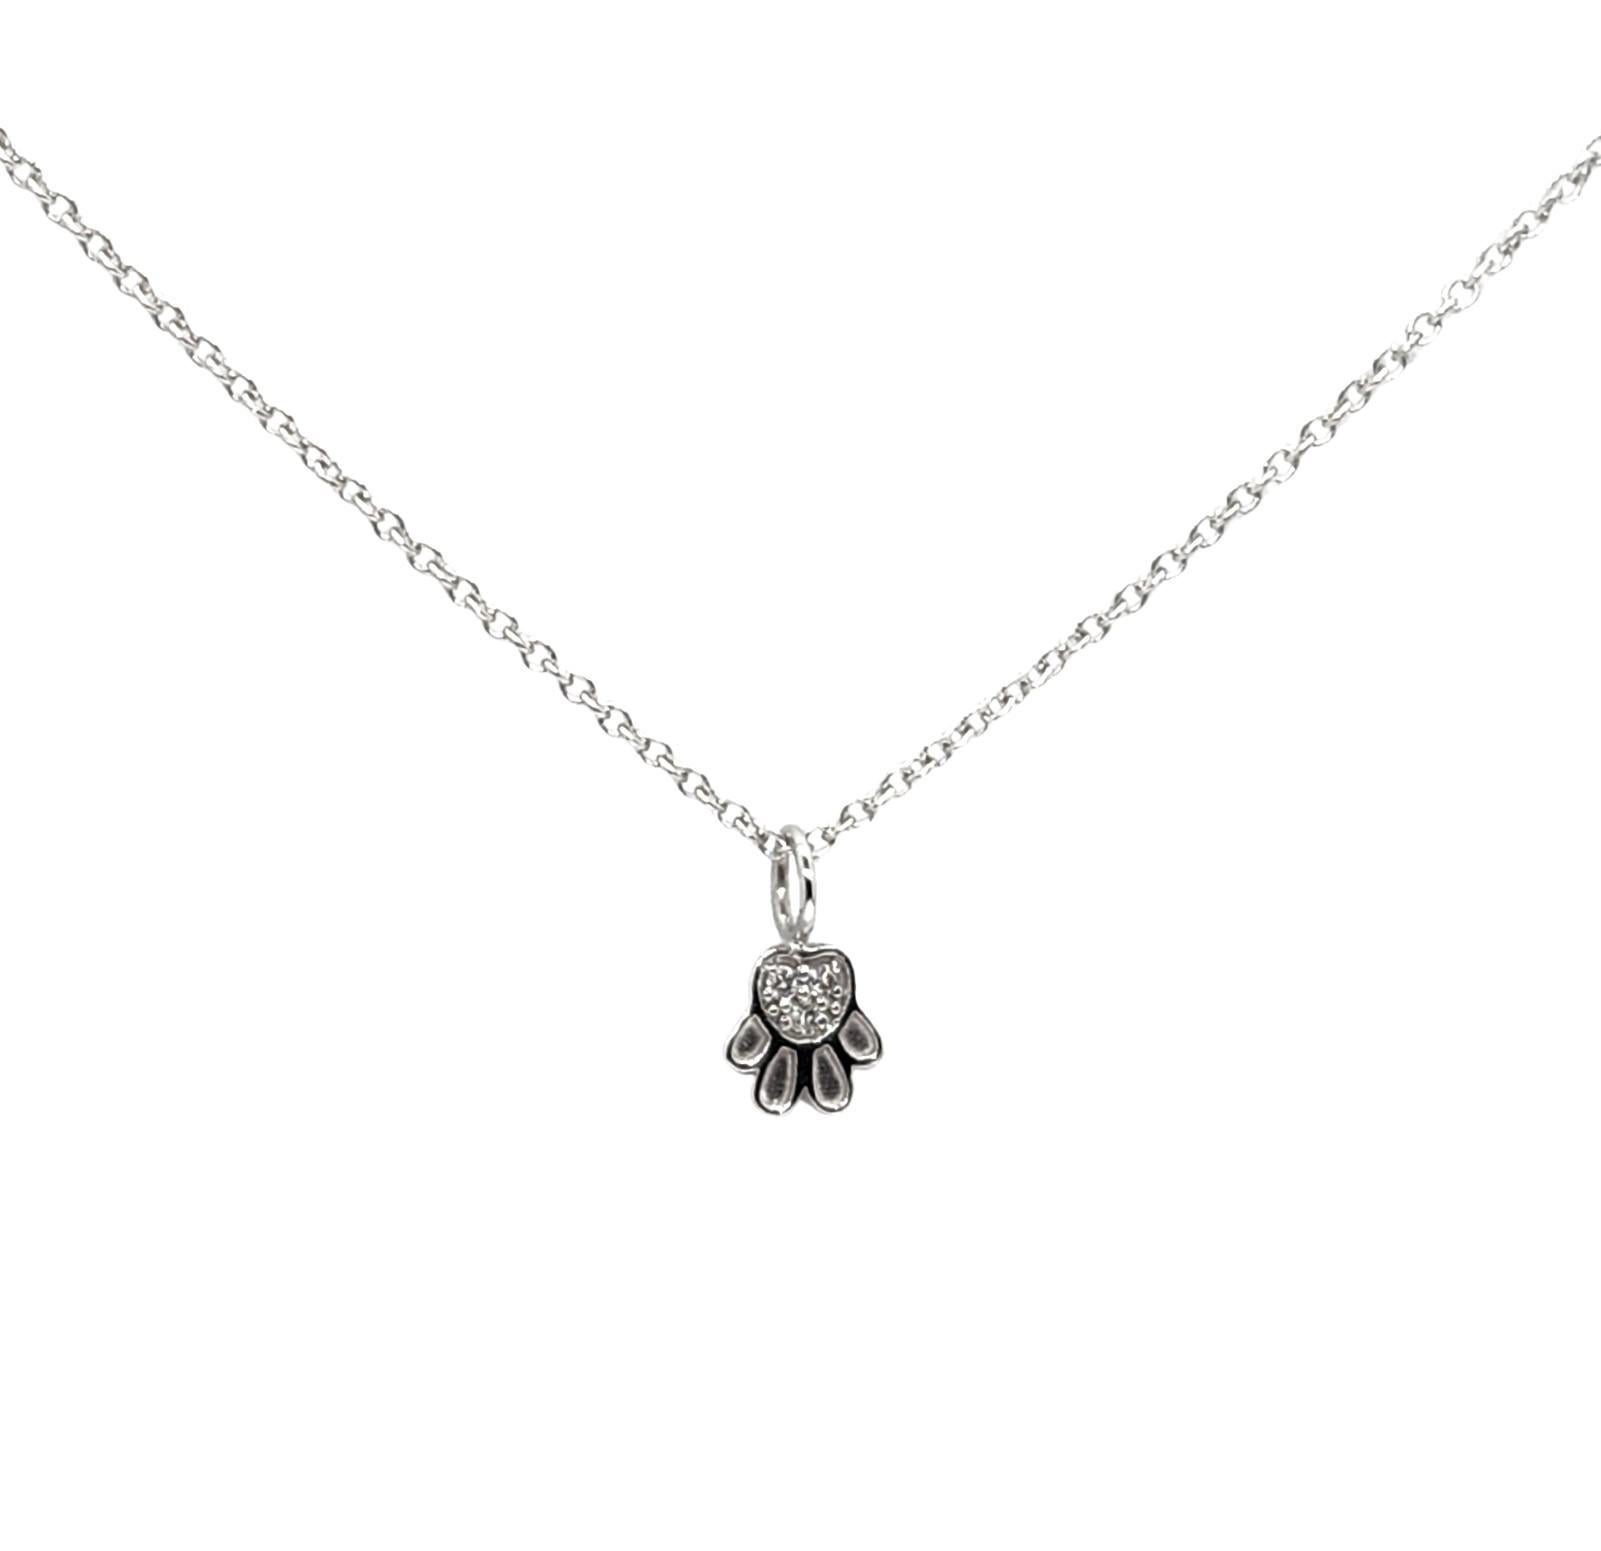 Brilliant Cut Companion Petite Paw Print Charm Necklace in 14K White Gold and Diamonds For Sale